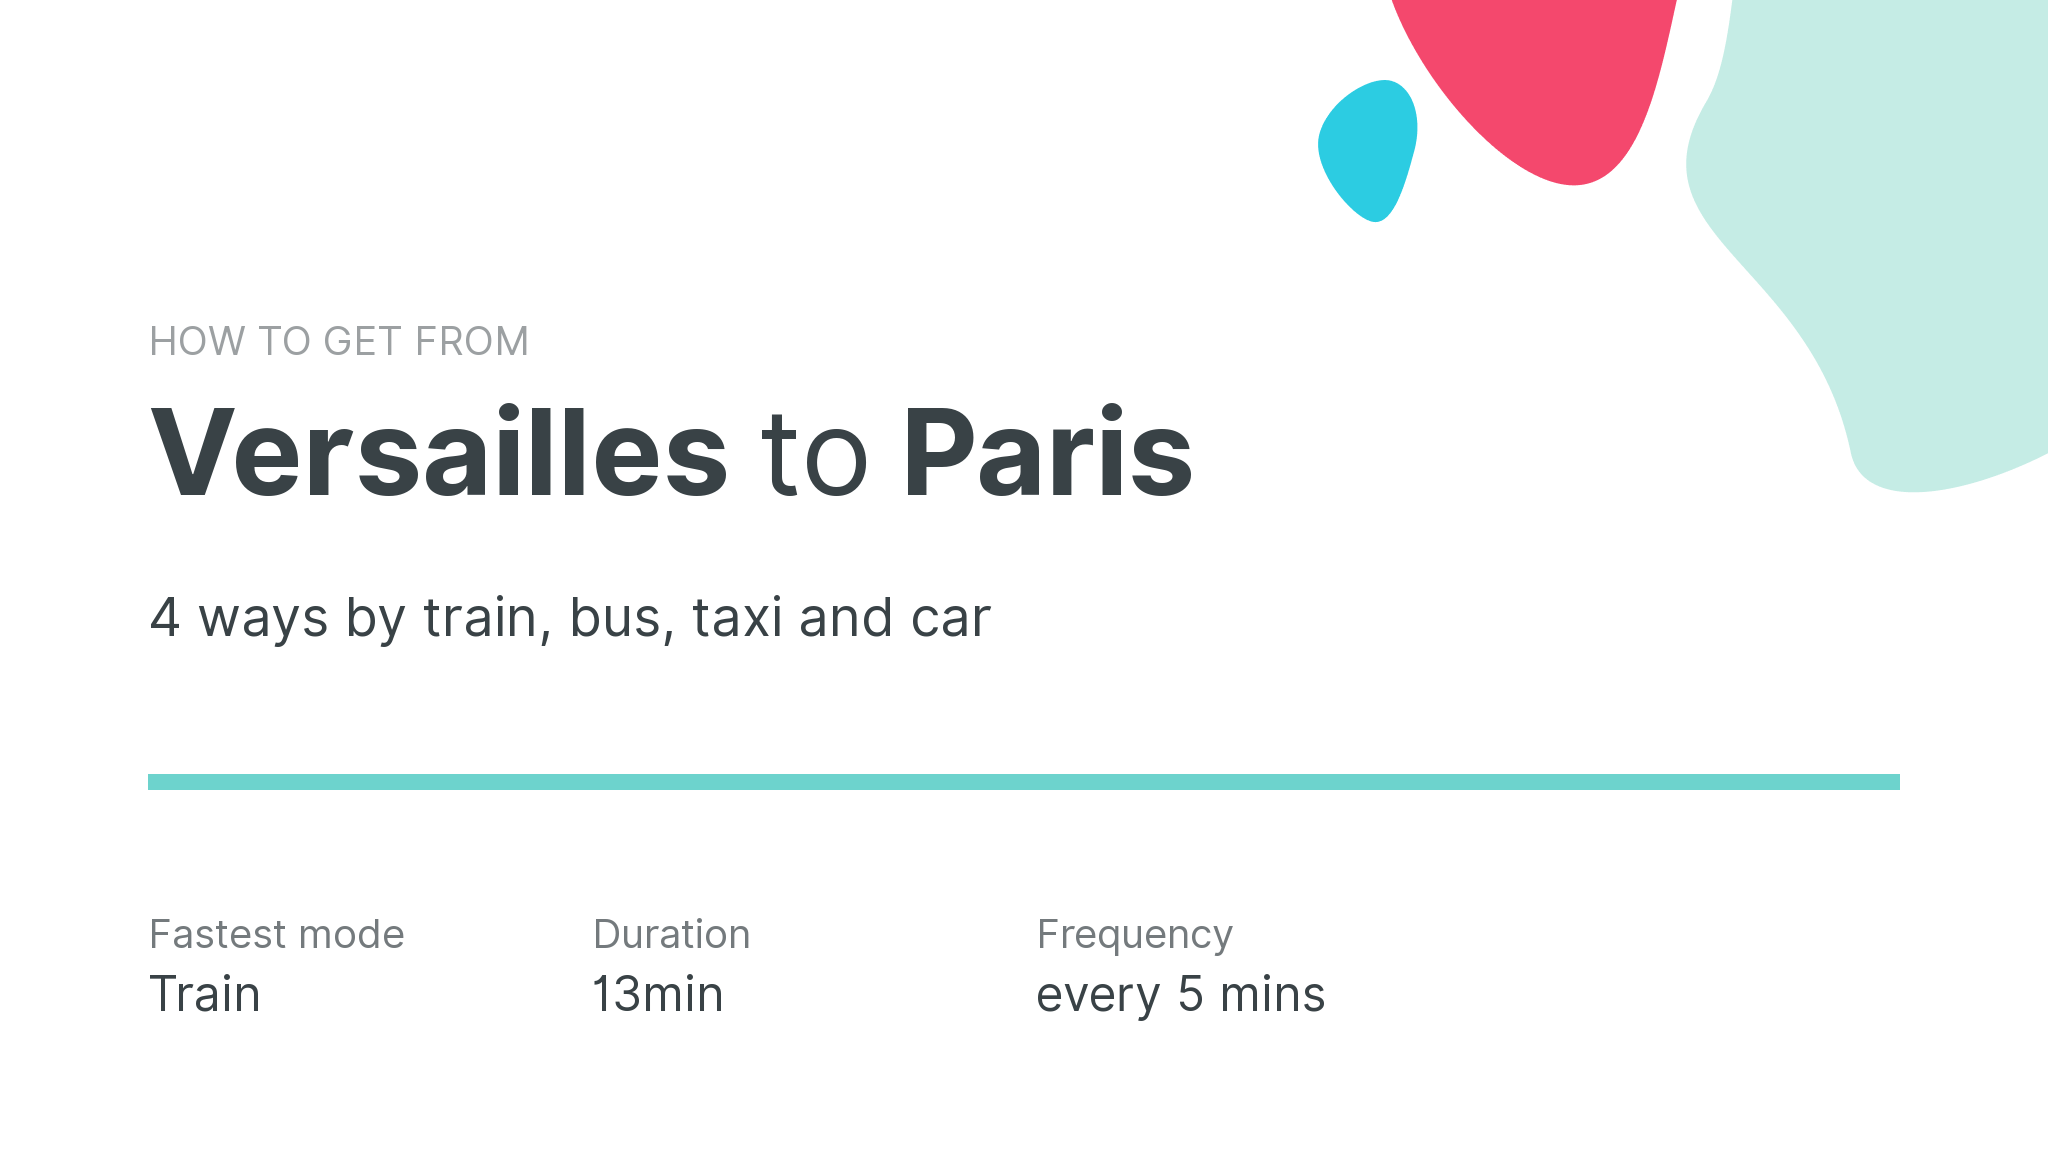 How do I get from Versailles to Paris